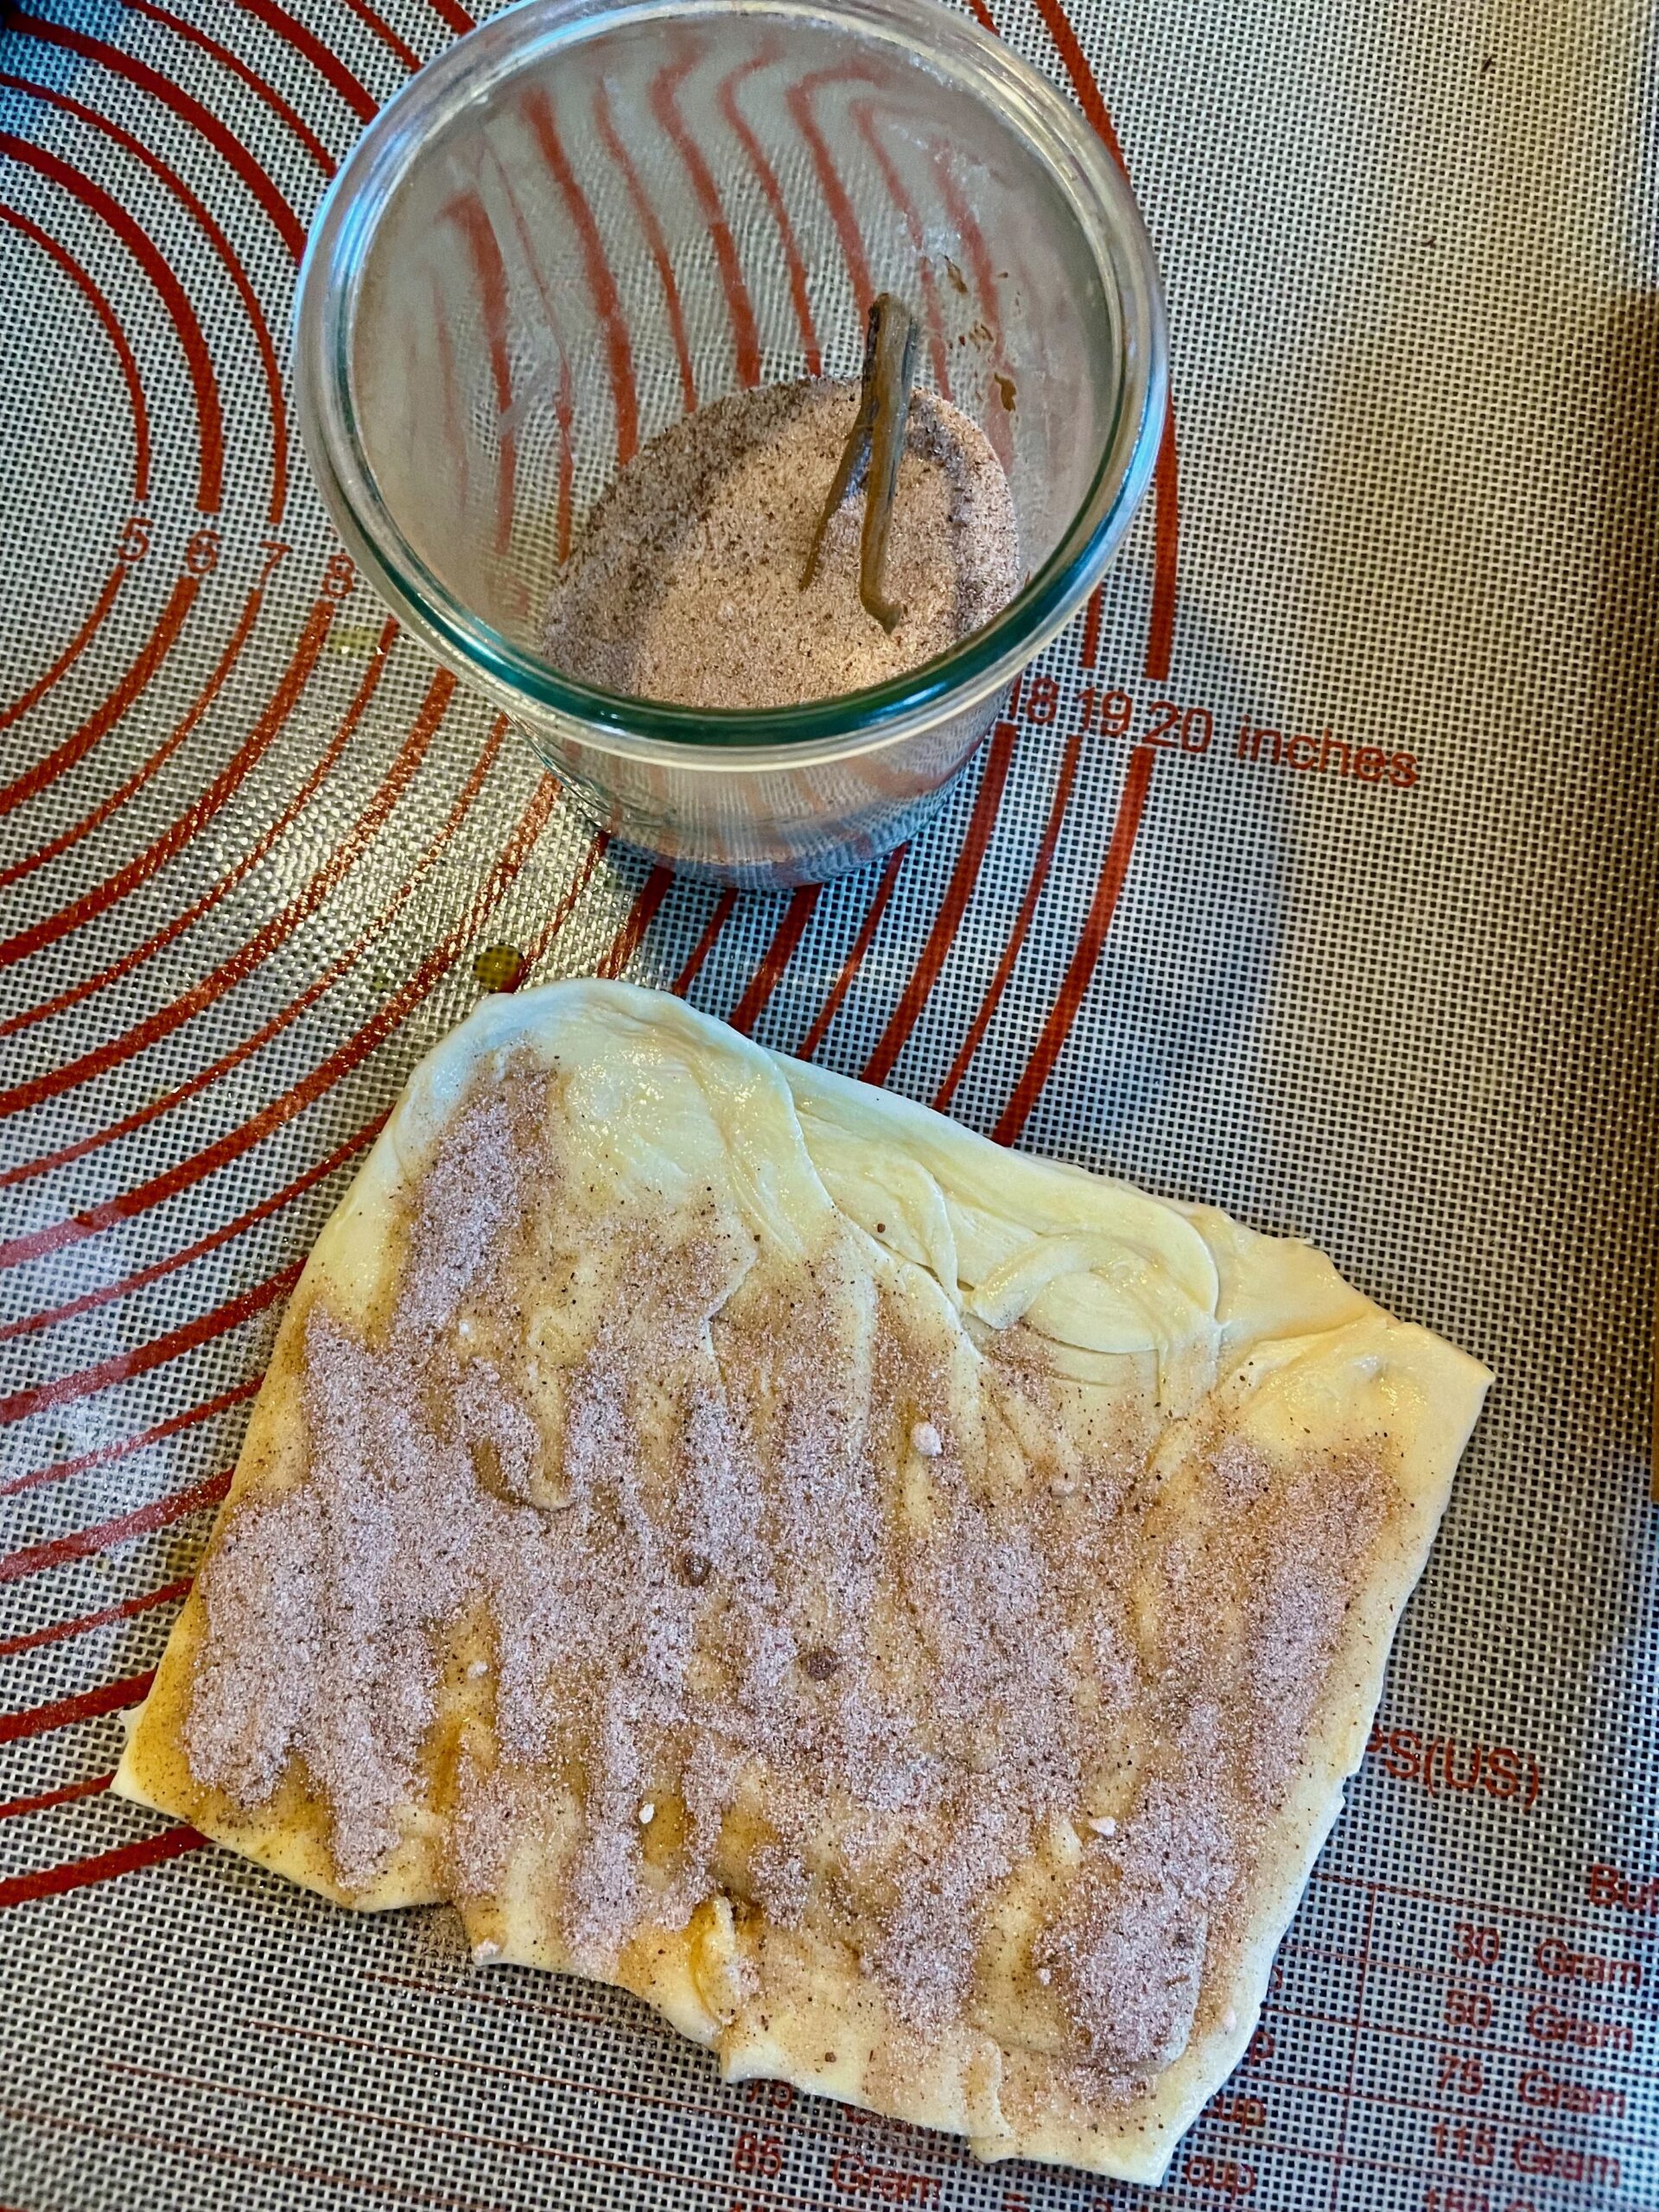 Making left over cinnamon rolls